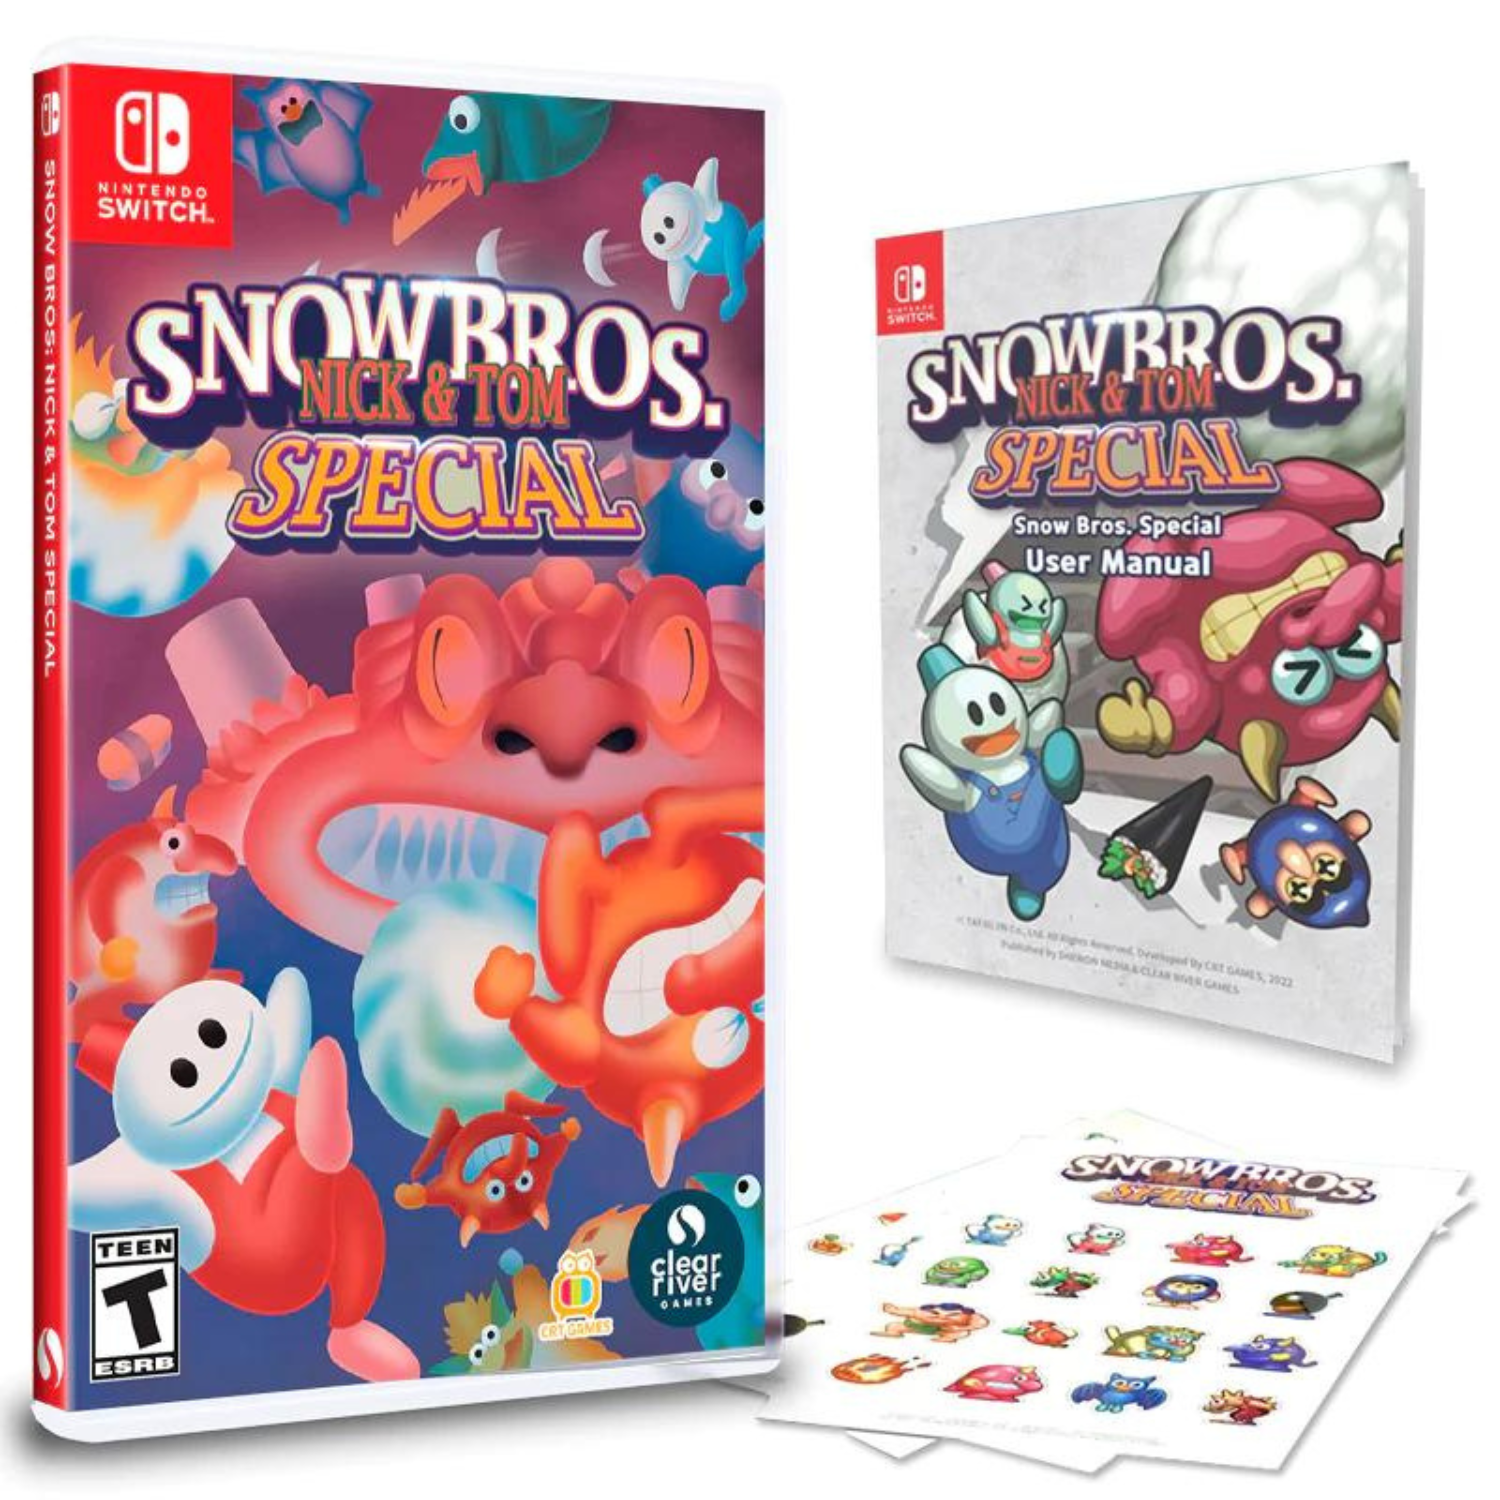 Snow Bros Nick and Tom Special Edition Nintendo Switch